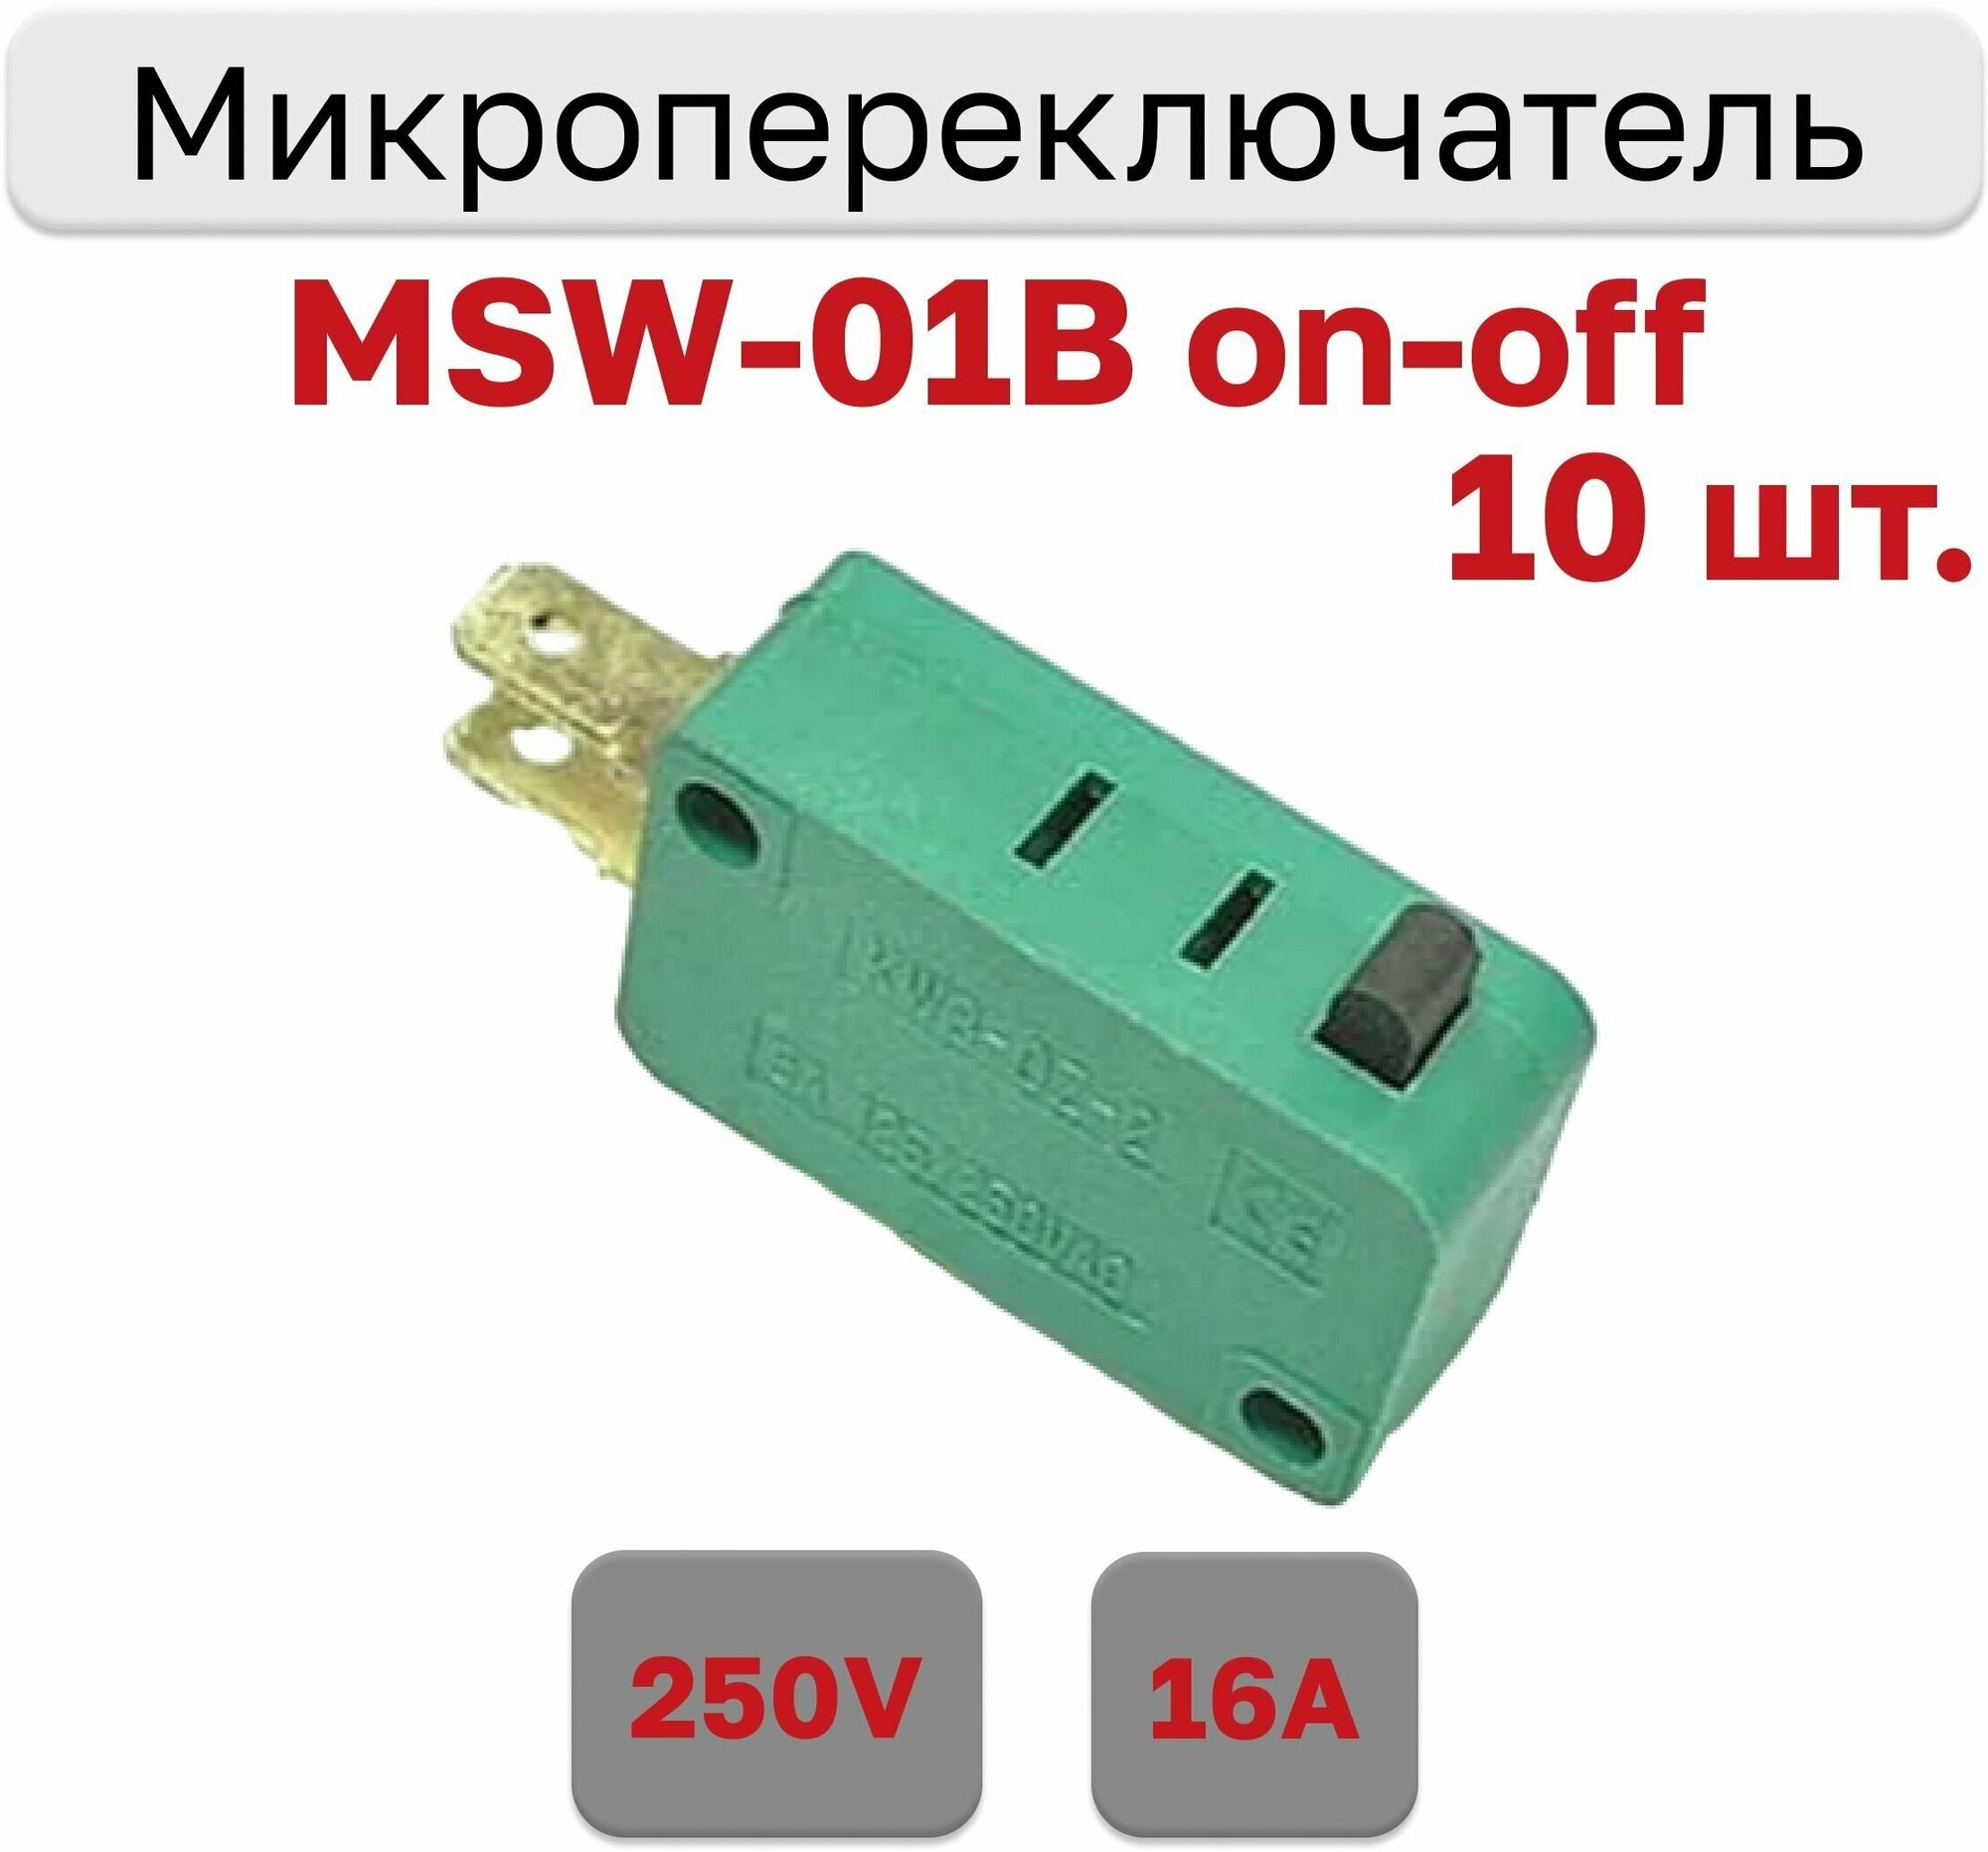 Микропереключатель MSW-01B on-off (16A/250VAC), 10 шт.